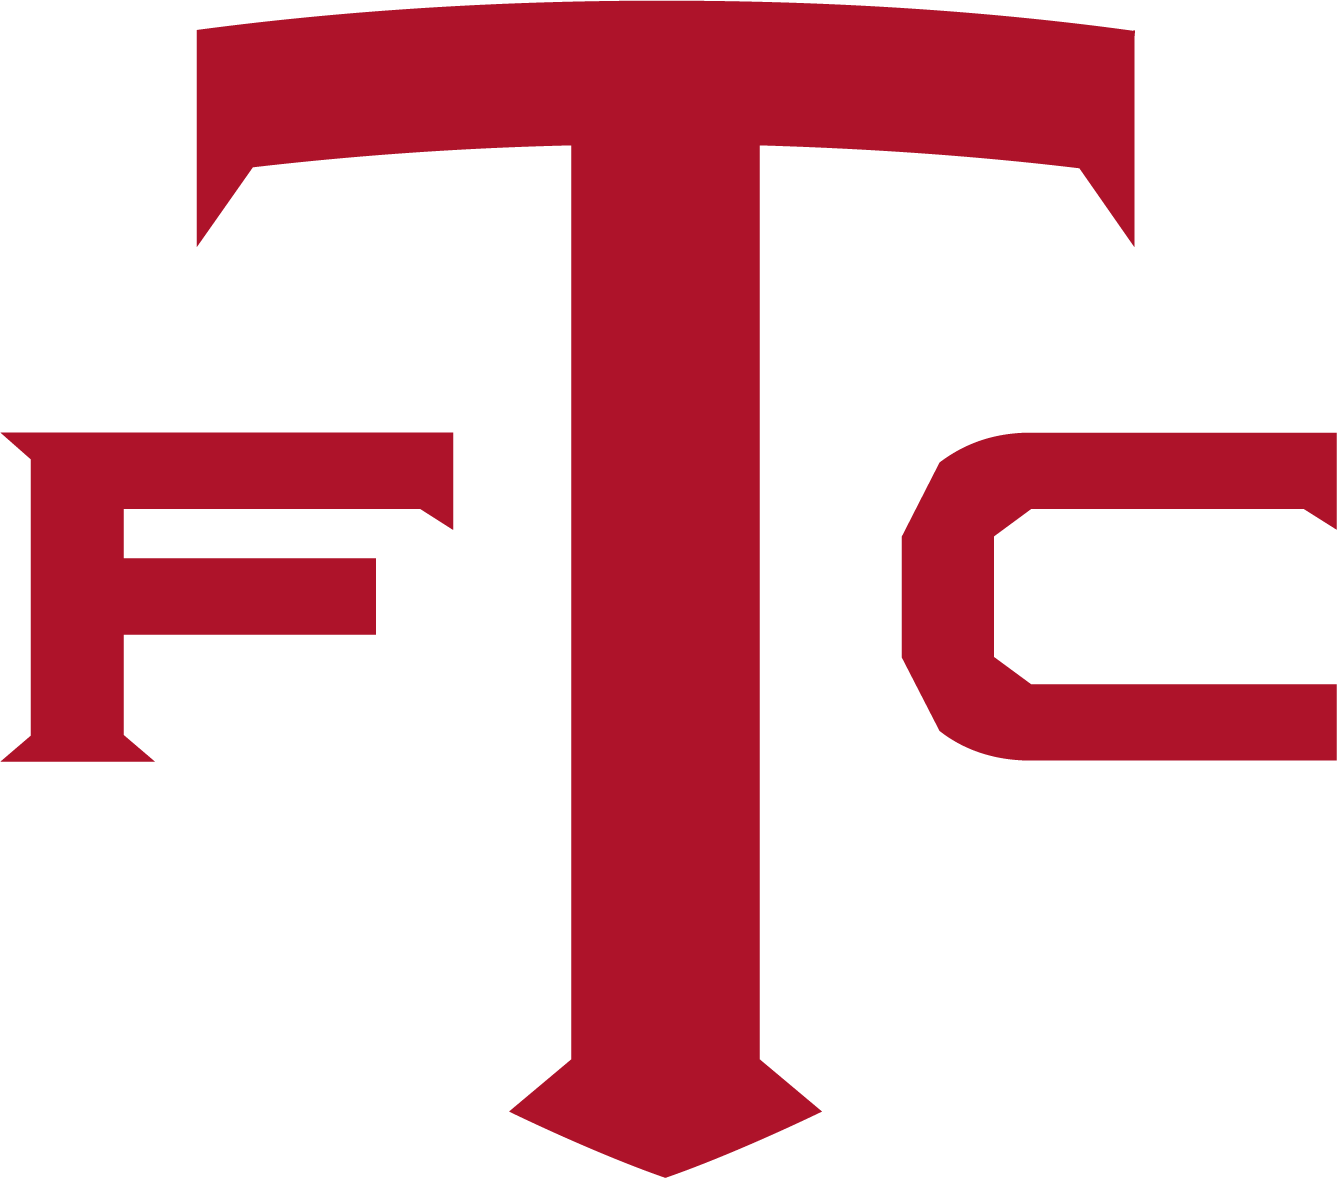 Toronto Fc New Logo (1337x1178)